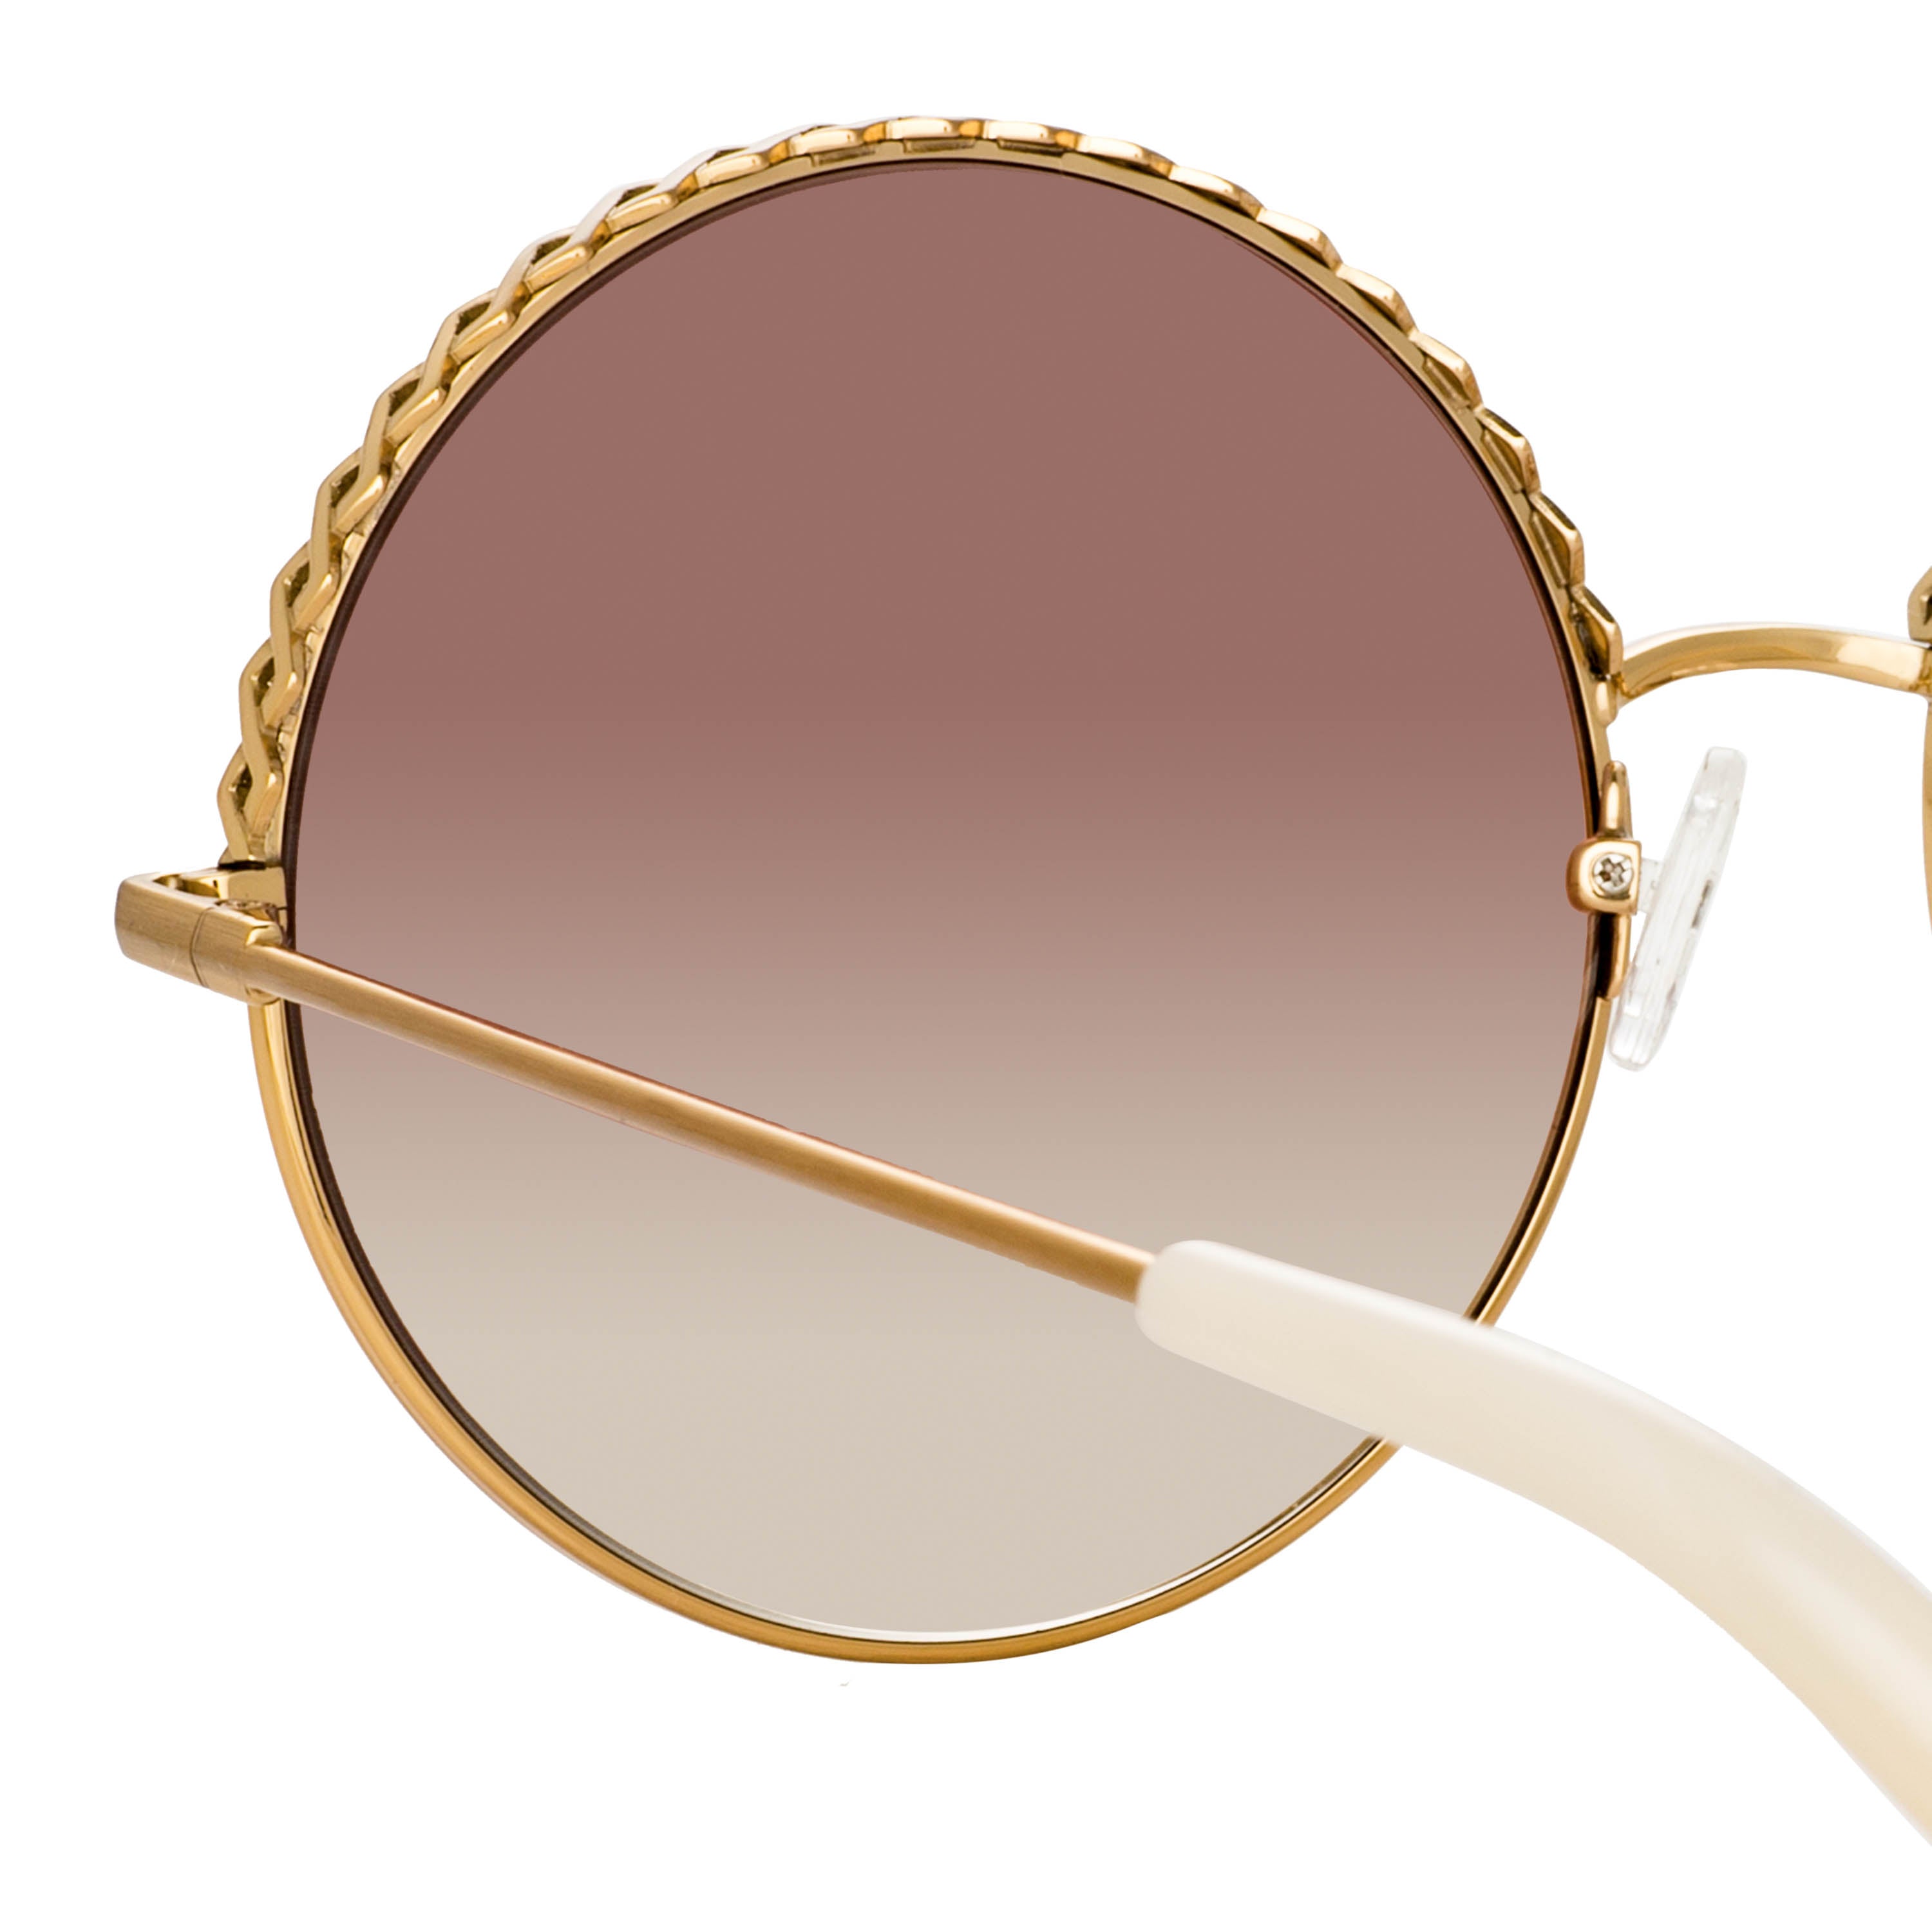 Gold/Pink/Brown Geranium Sunglasses